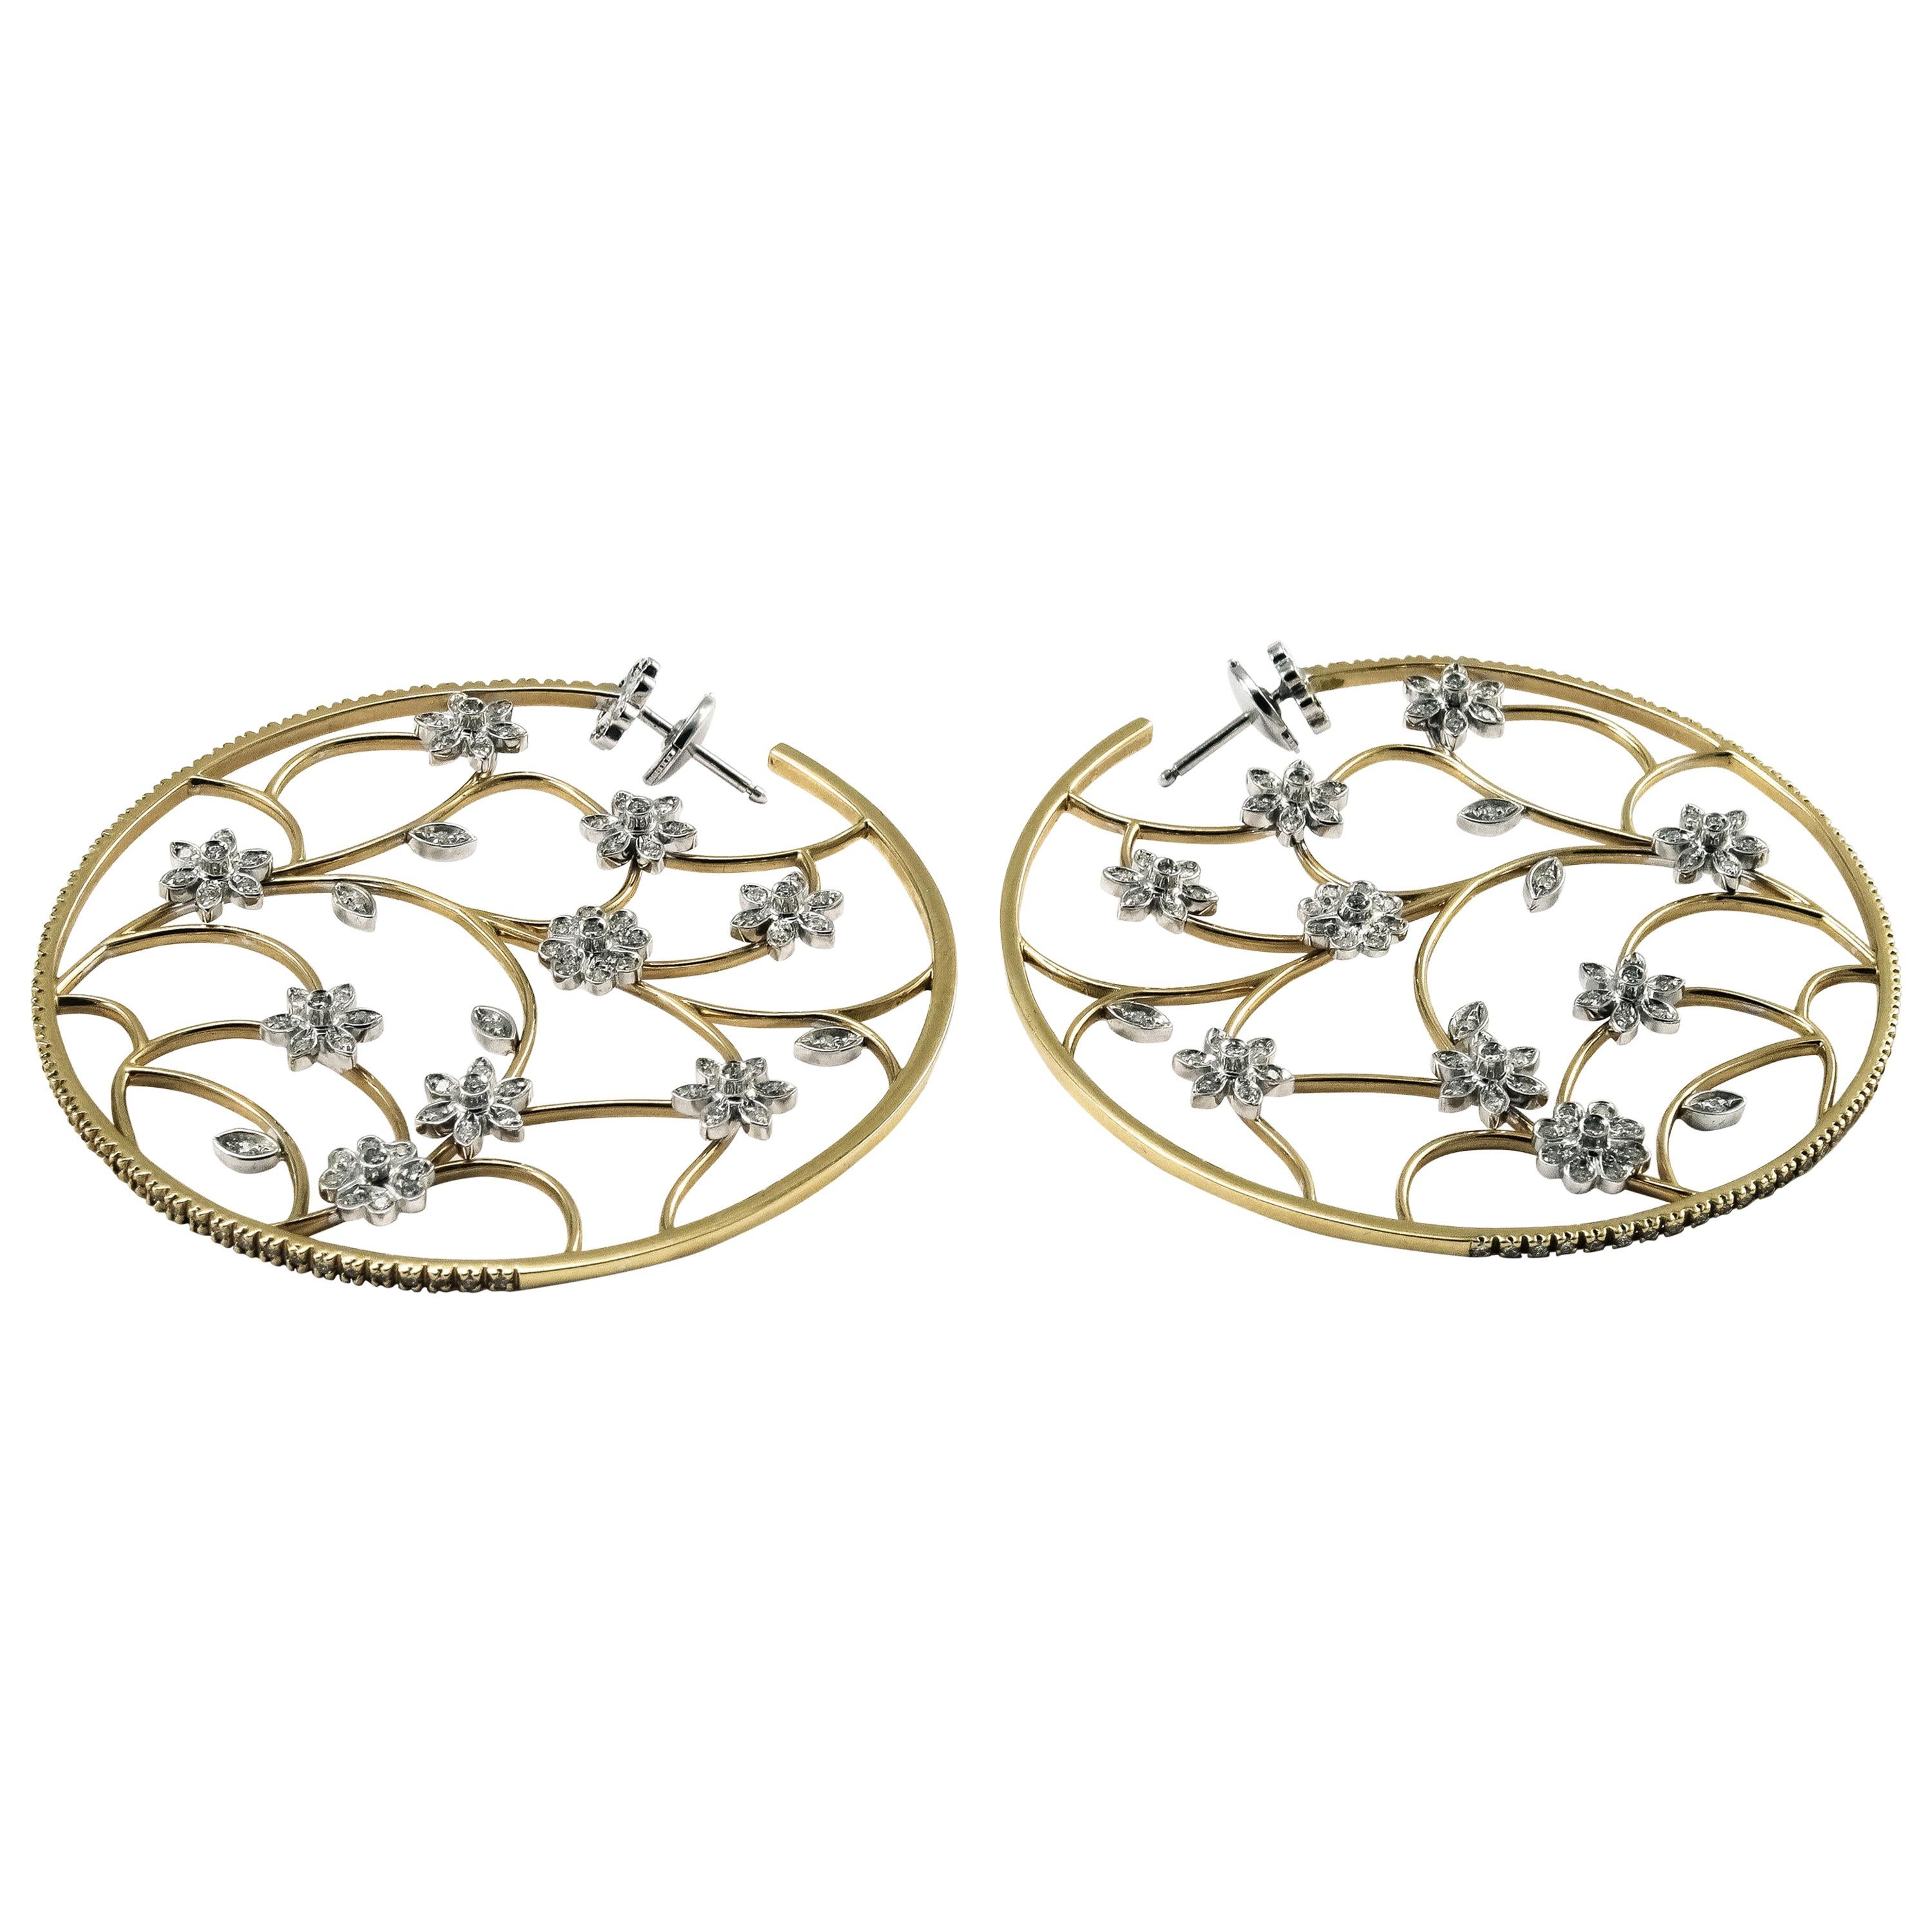 18 Karat Yellow Gold and Diamonds Openwork Hoop Earrings with Flower Details